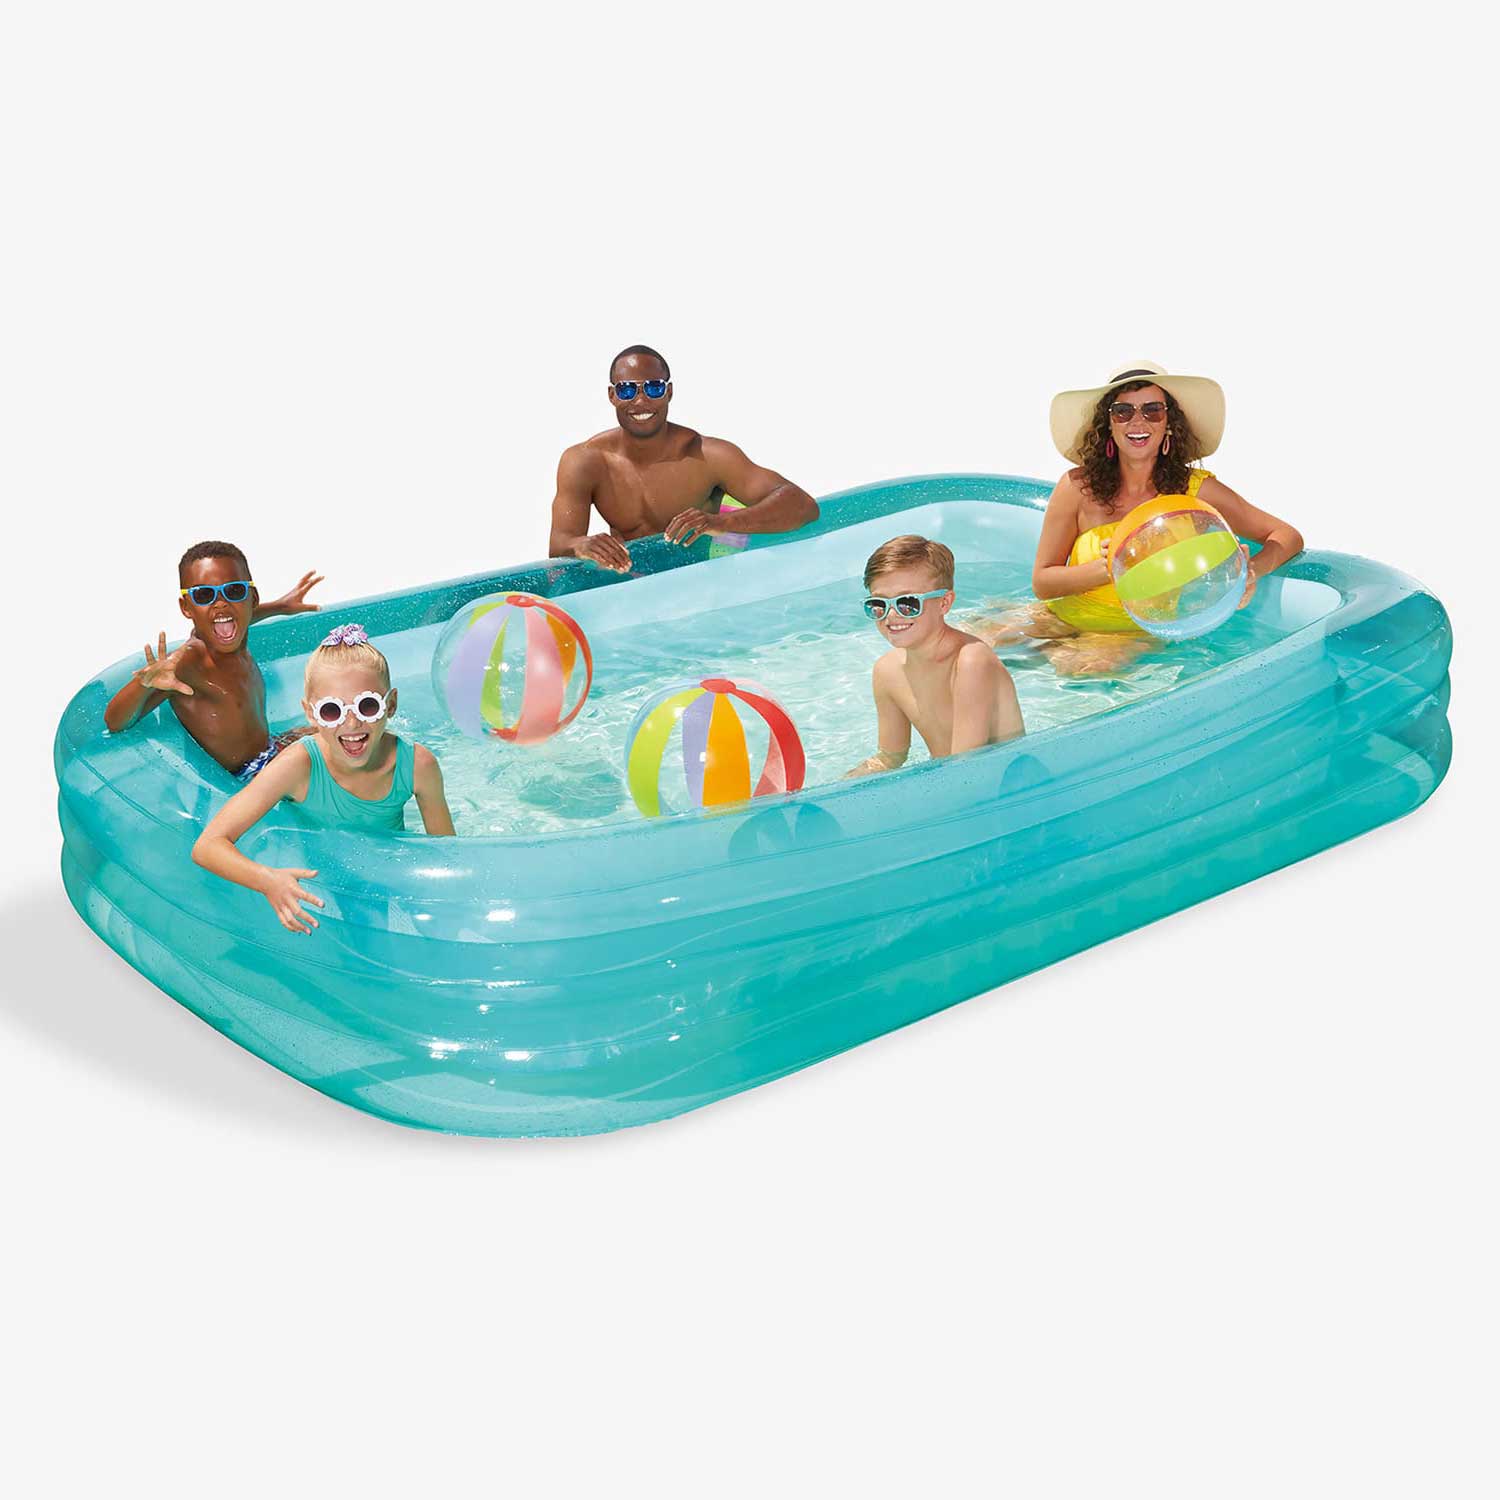 Funsicle AquaSplash Pool with people